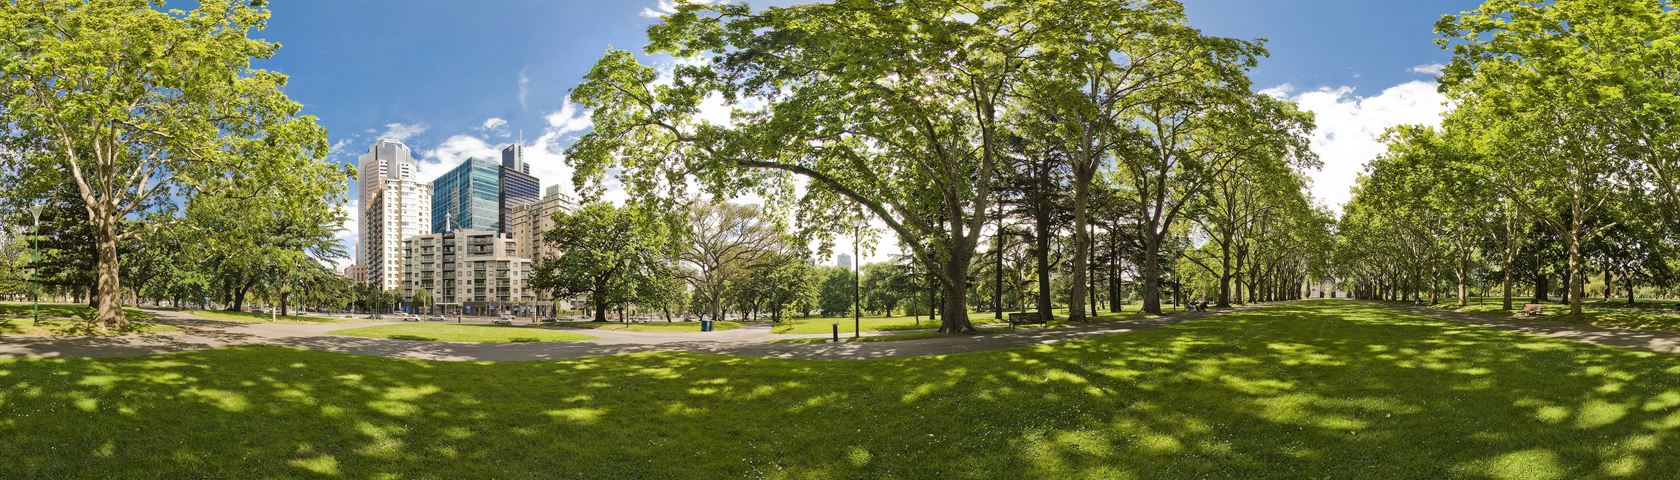 Carlton Gardens Trees